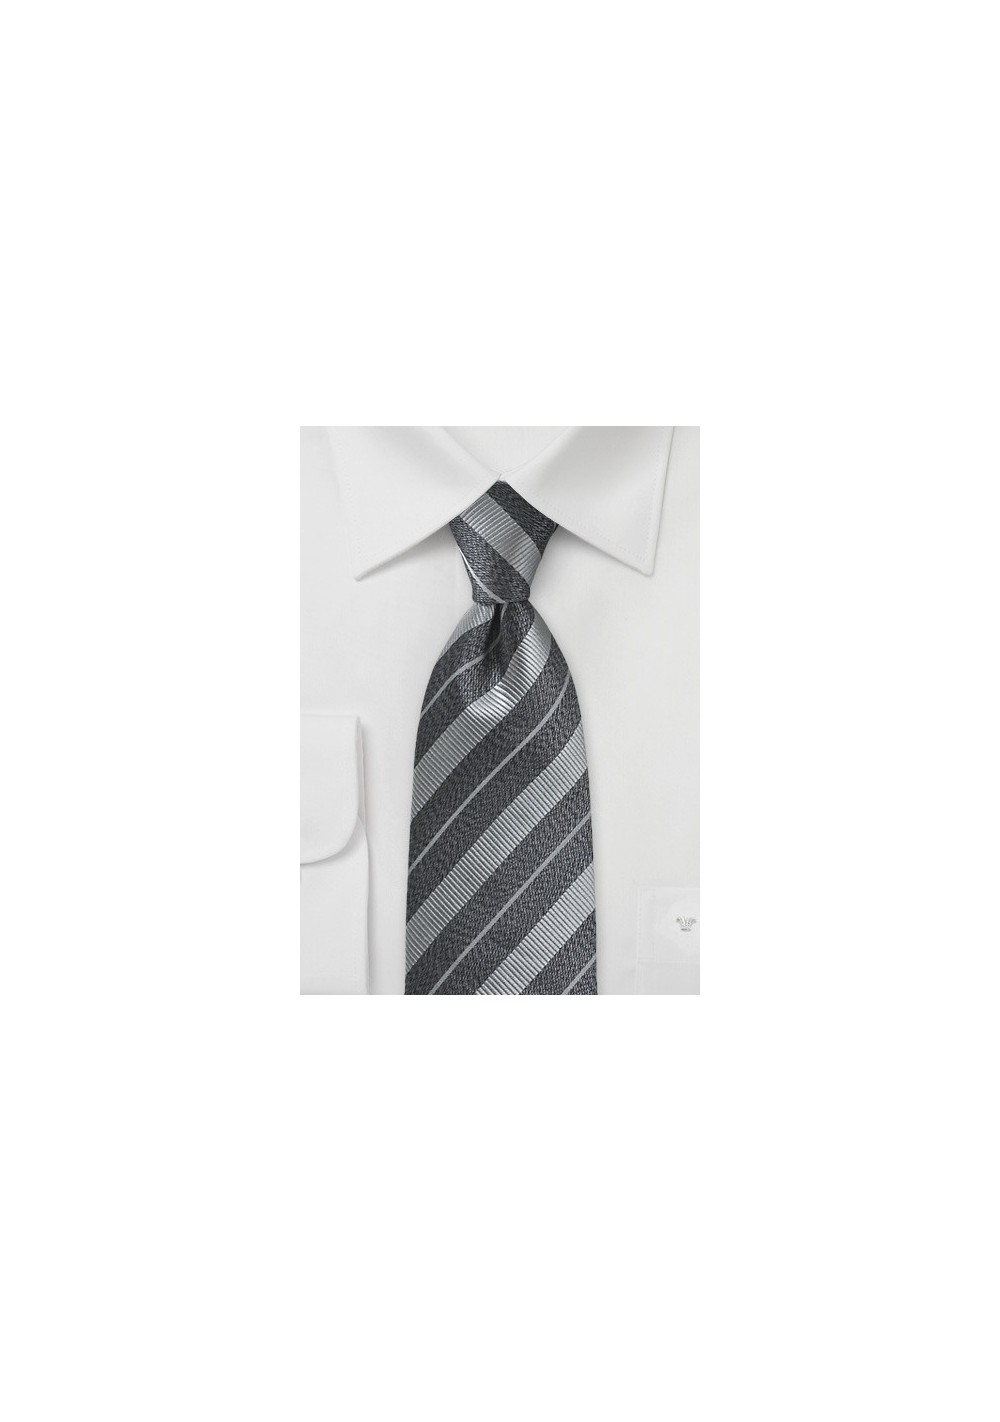 Monochromatic Striped Tie in Greys